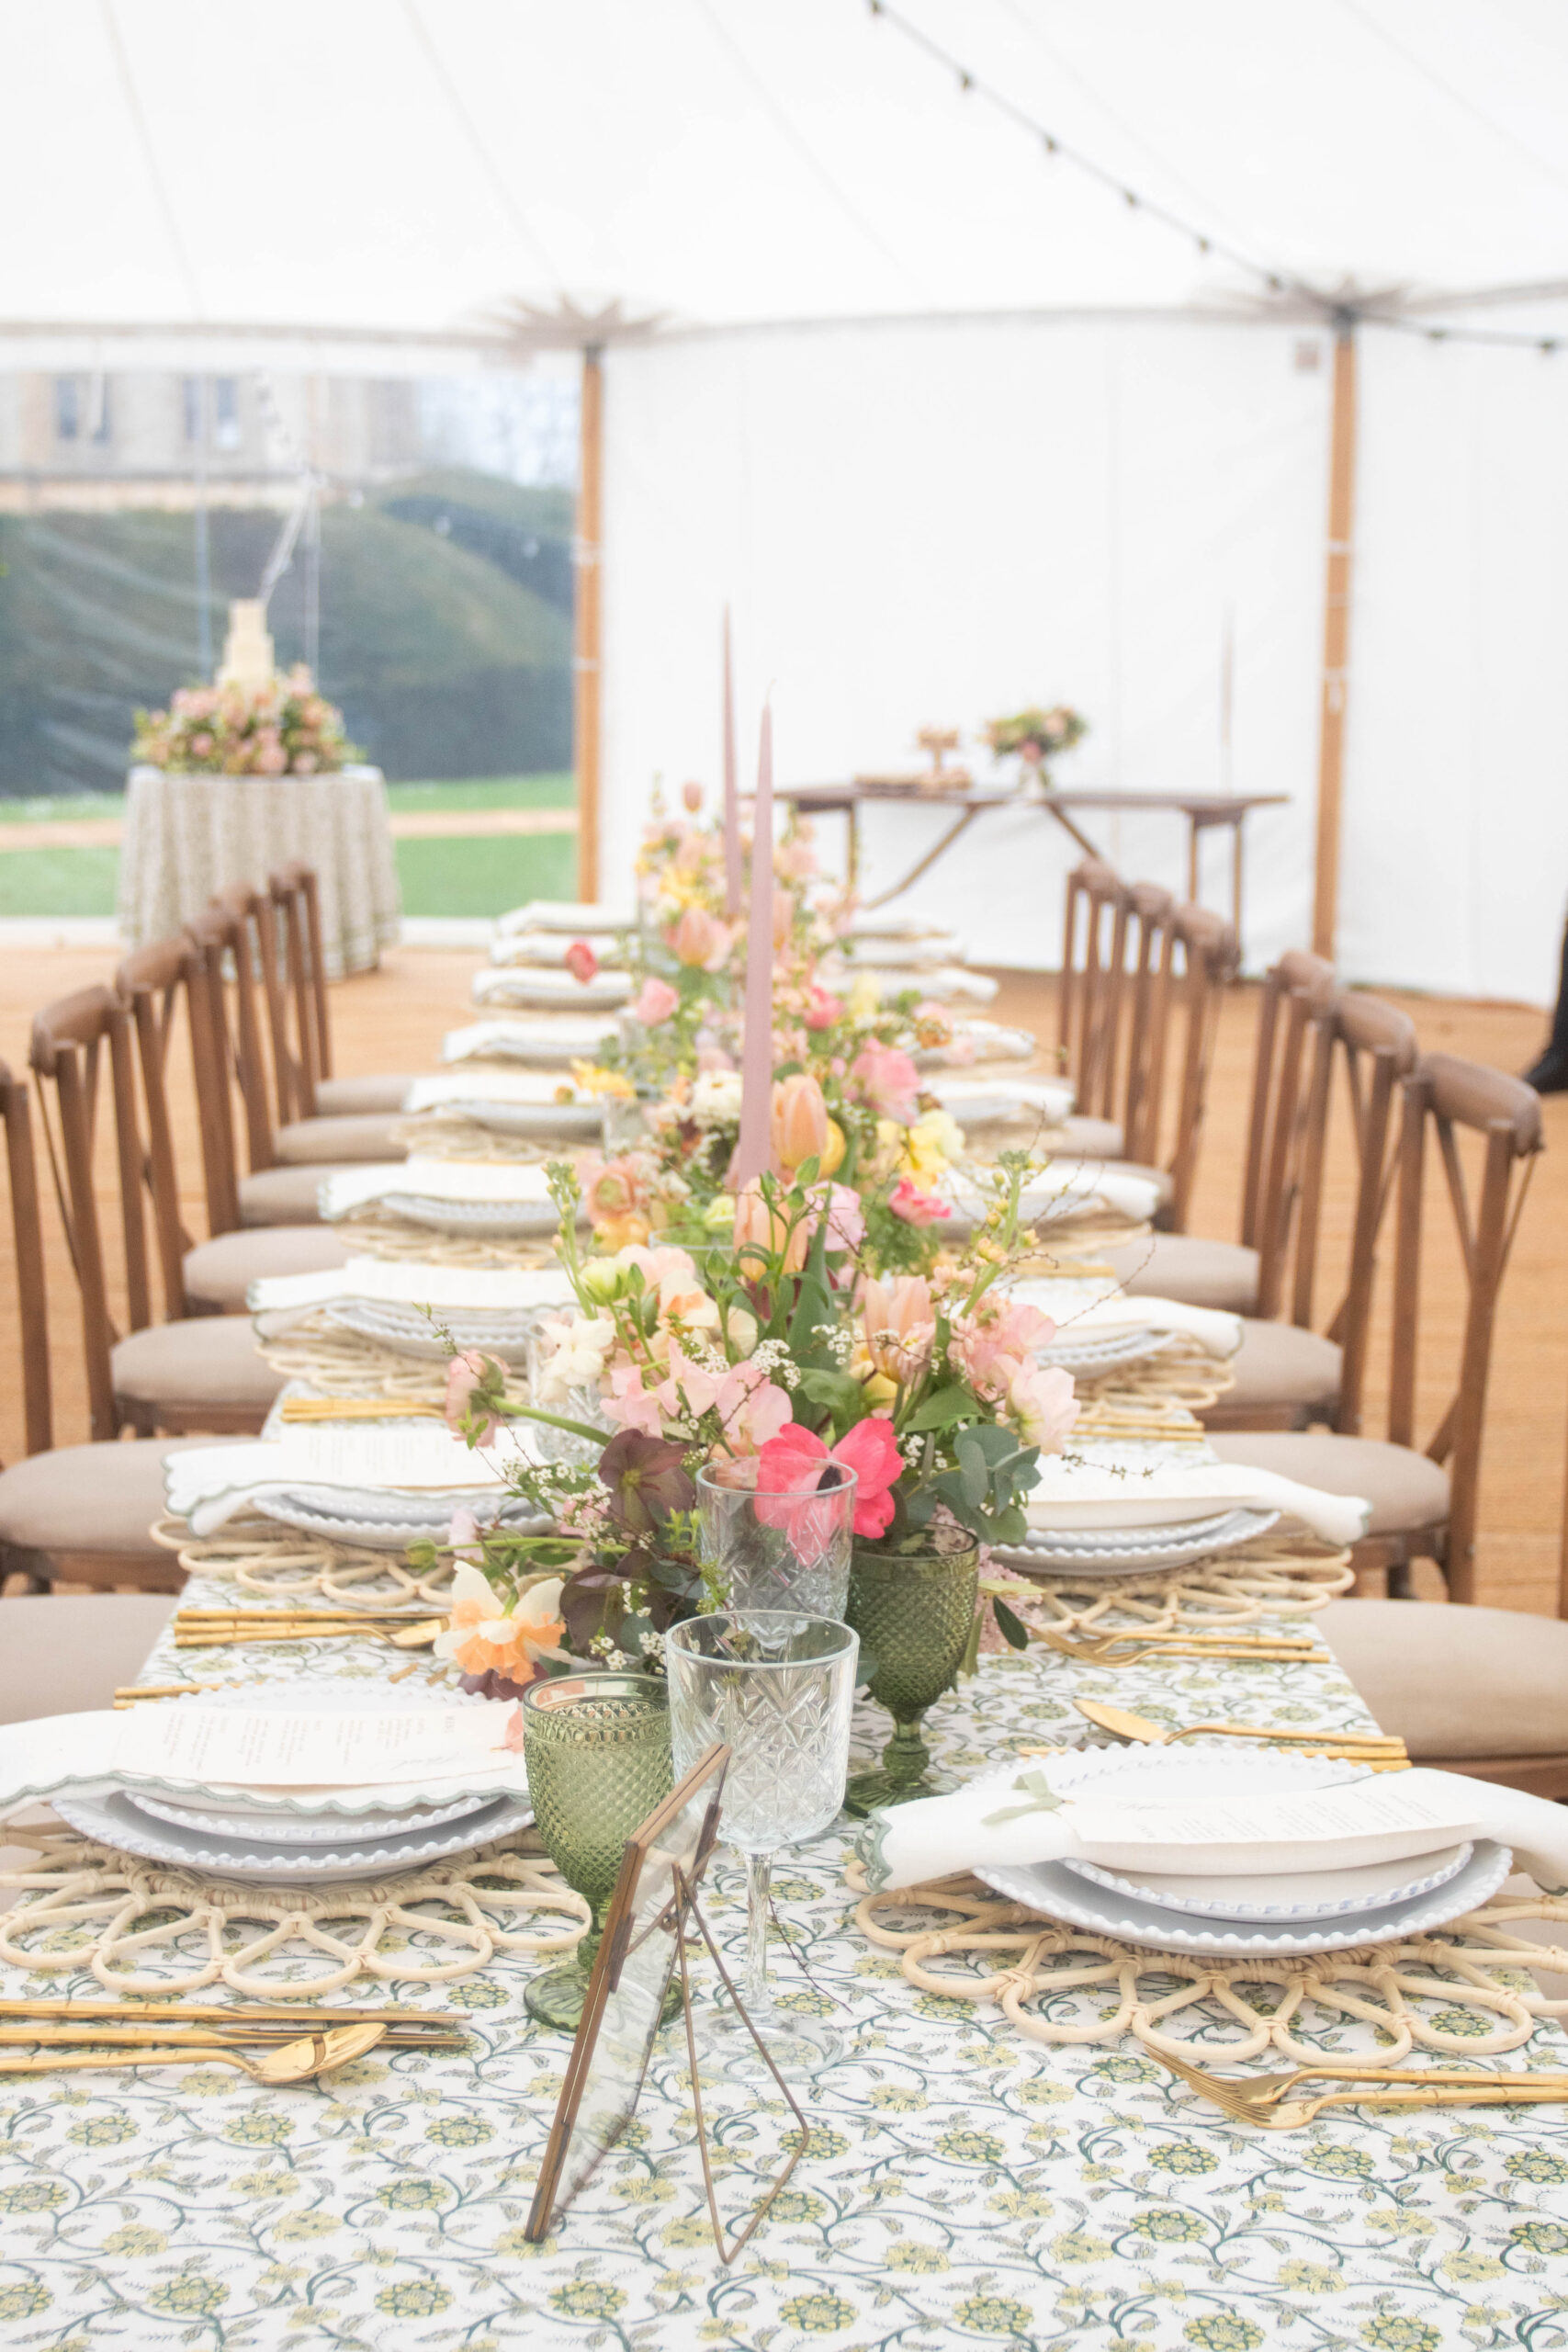 Farleigh house wedding venue floral designs